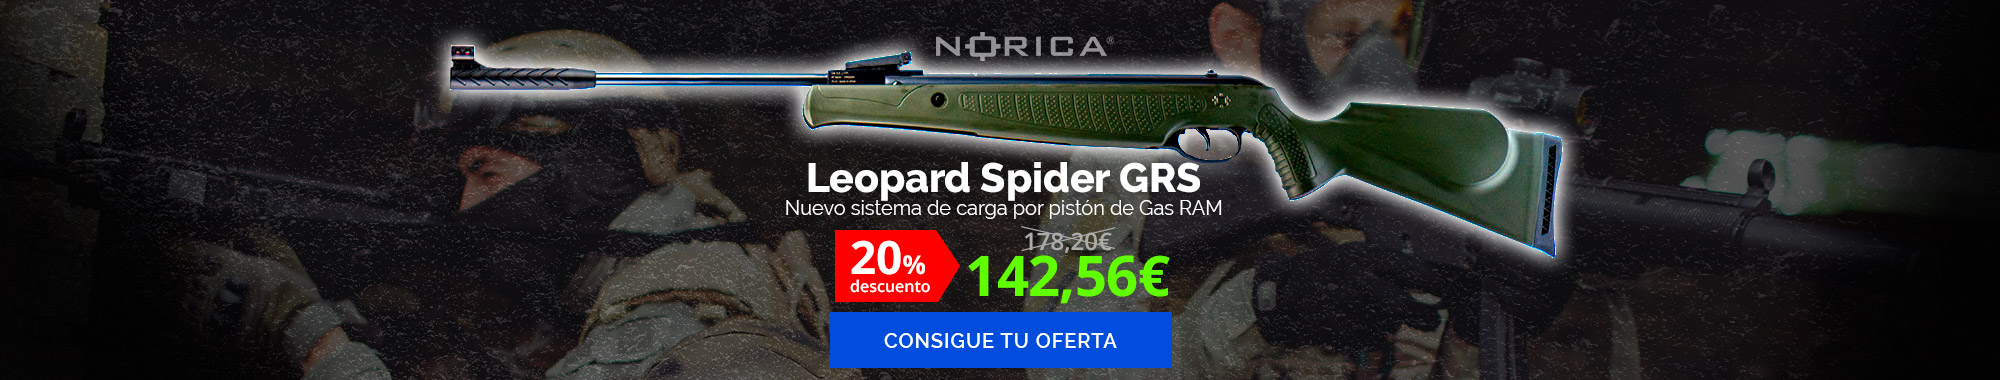 -20% Norica Leopard Spider GRS